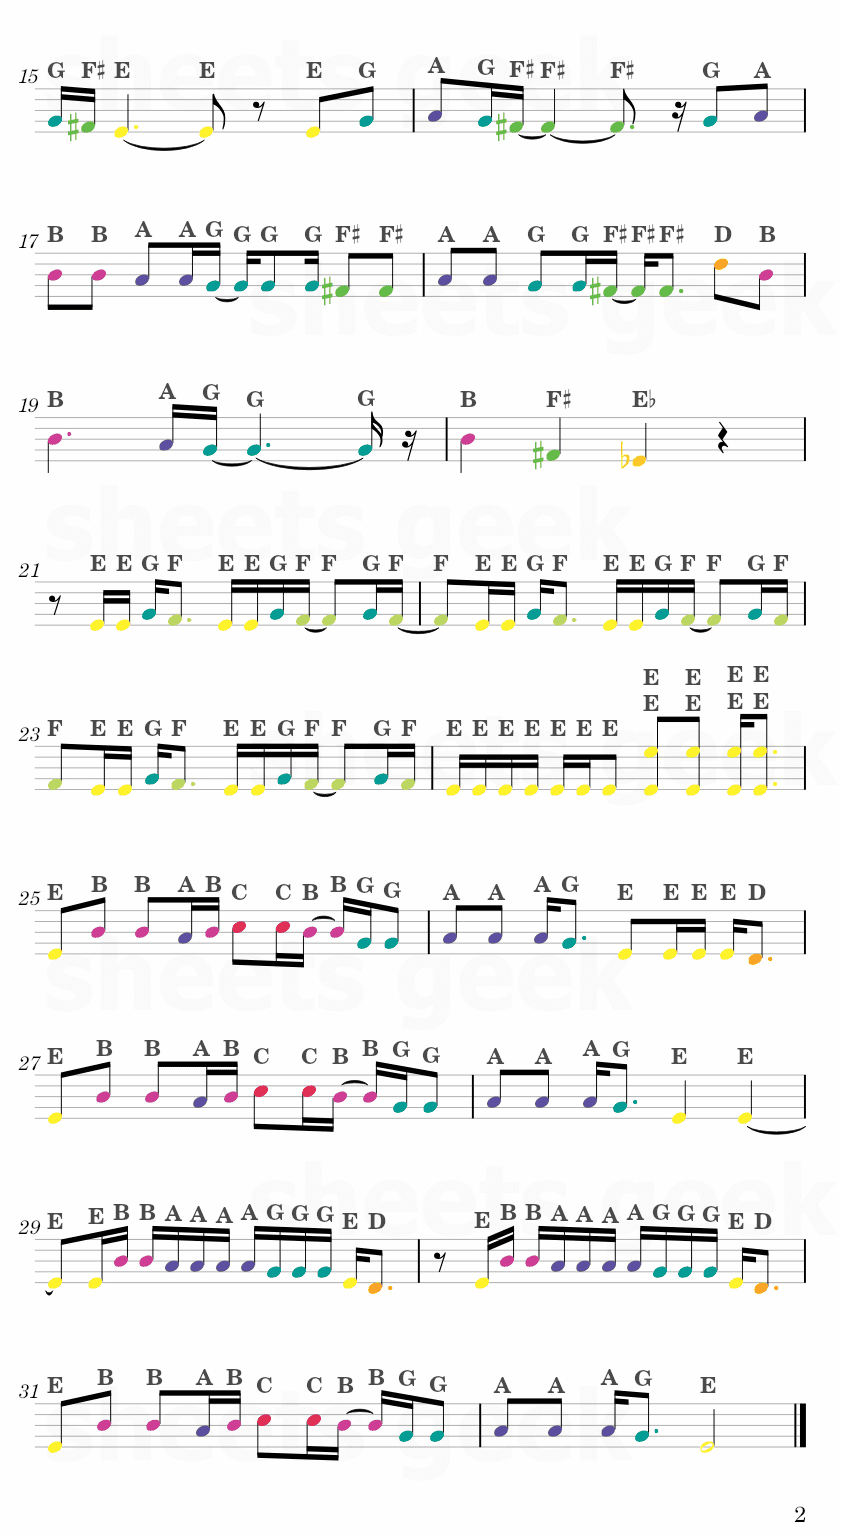 UNFORGIVEN - LE SSERAFIM feat. Nile Rodgers Easy Sheet Music Free for piano, keyboard, flute, violin, sax, cello page 2